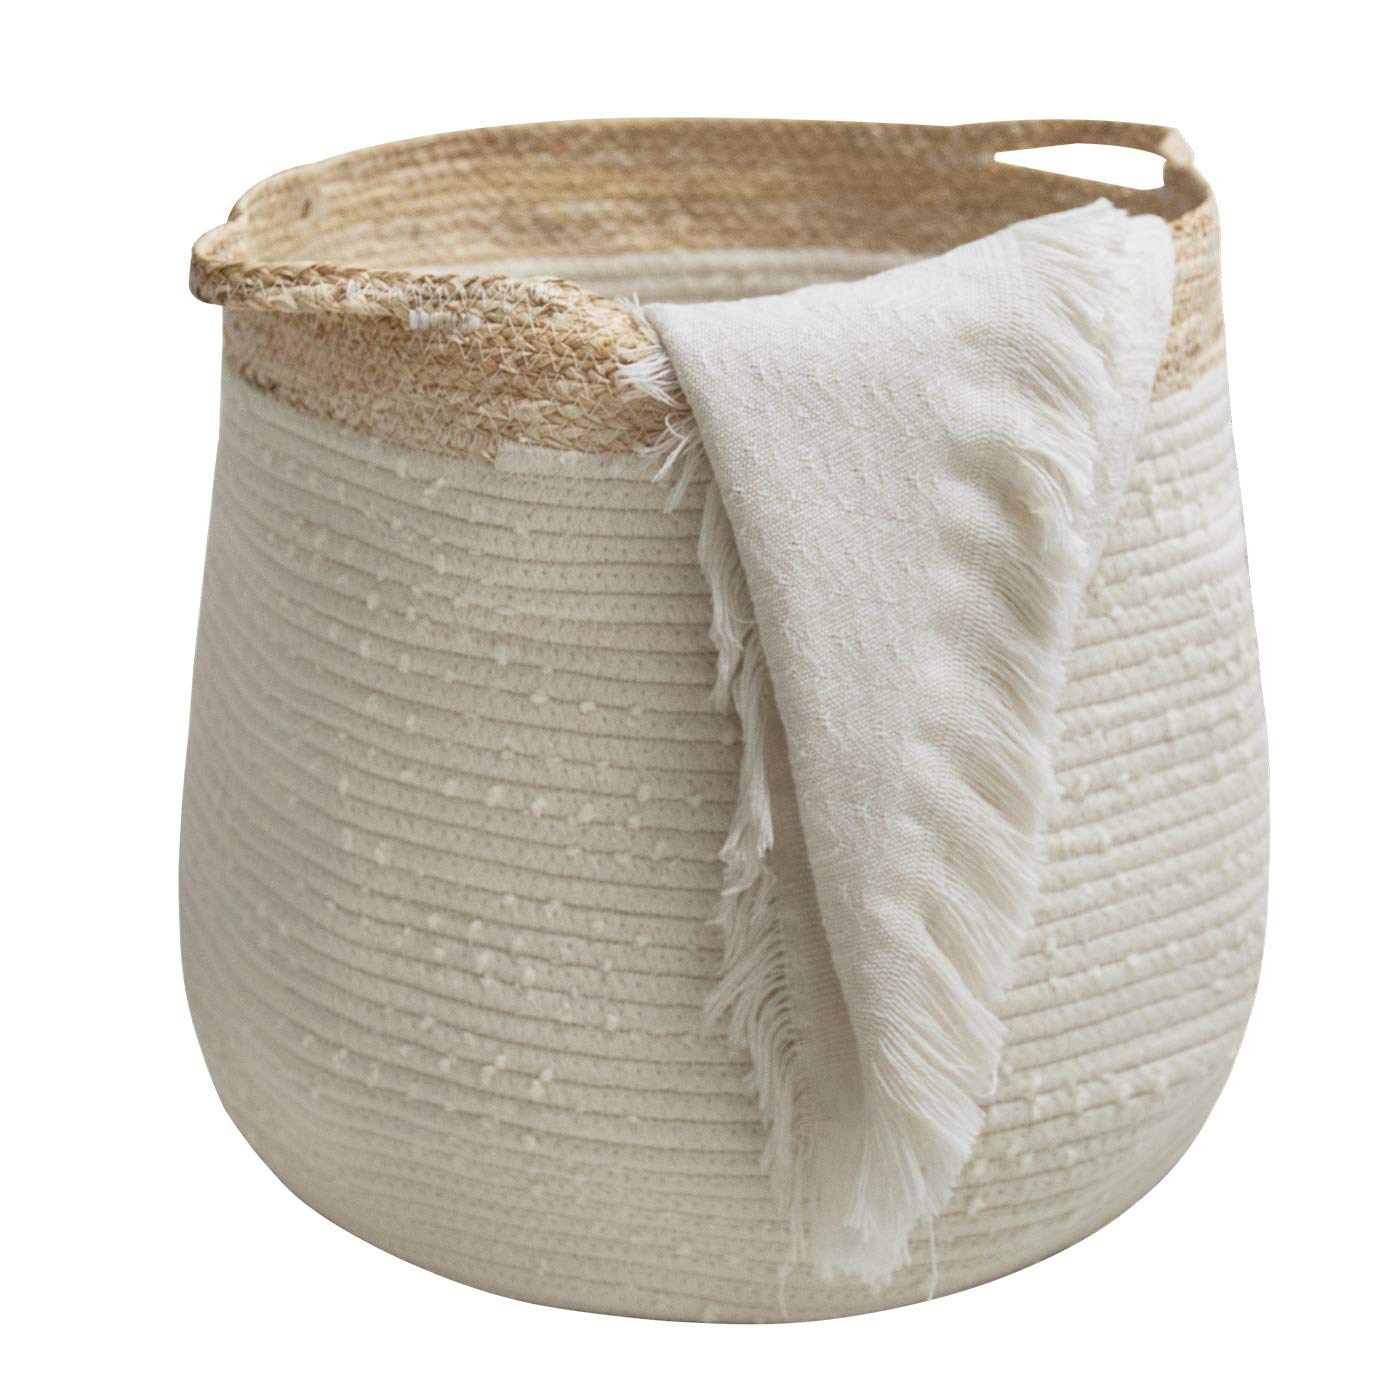 light beige knitted basket